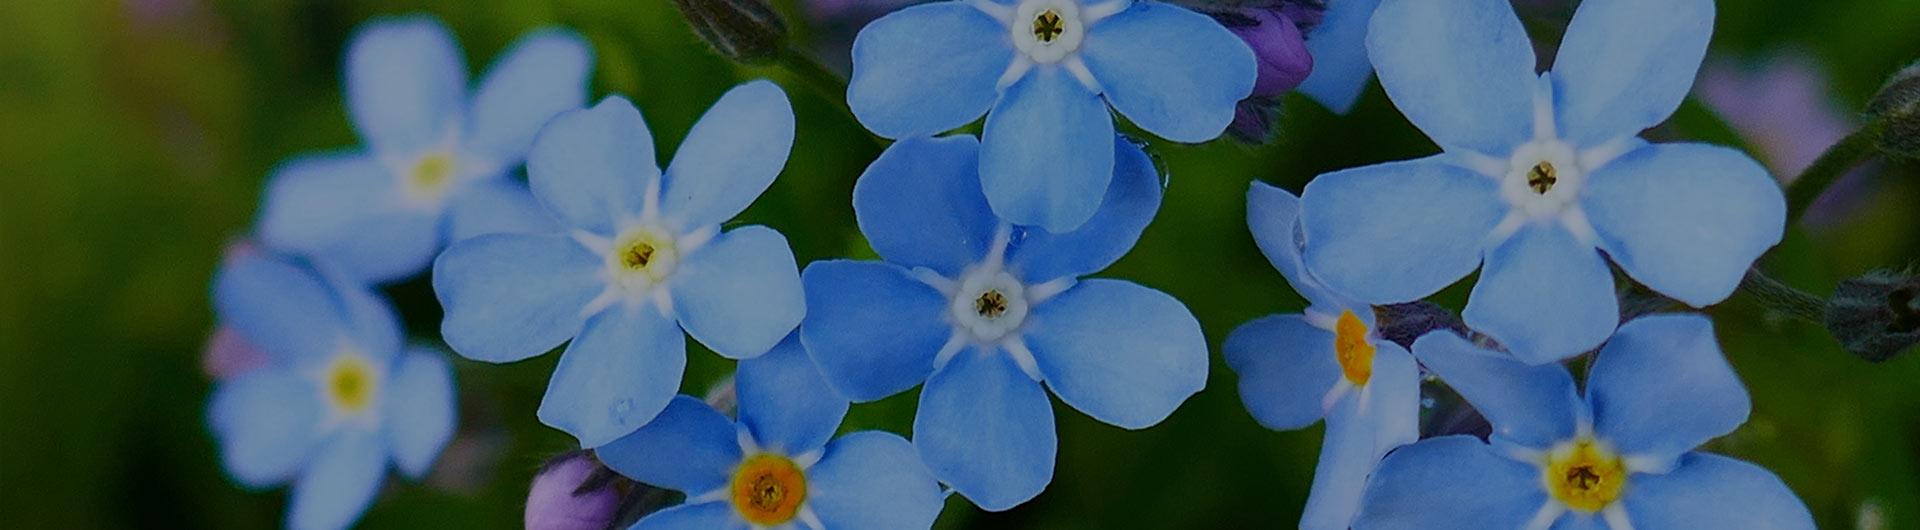 Forget-me-nots, Alaska's state flower.